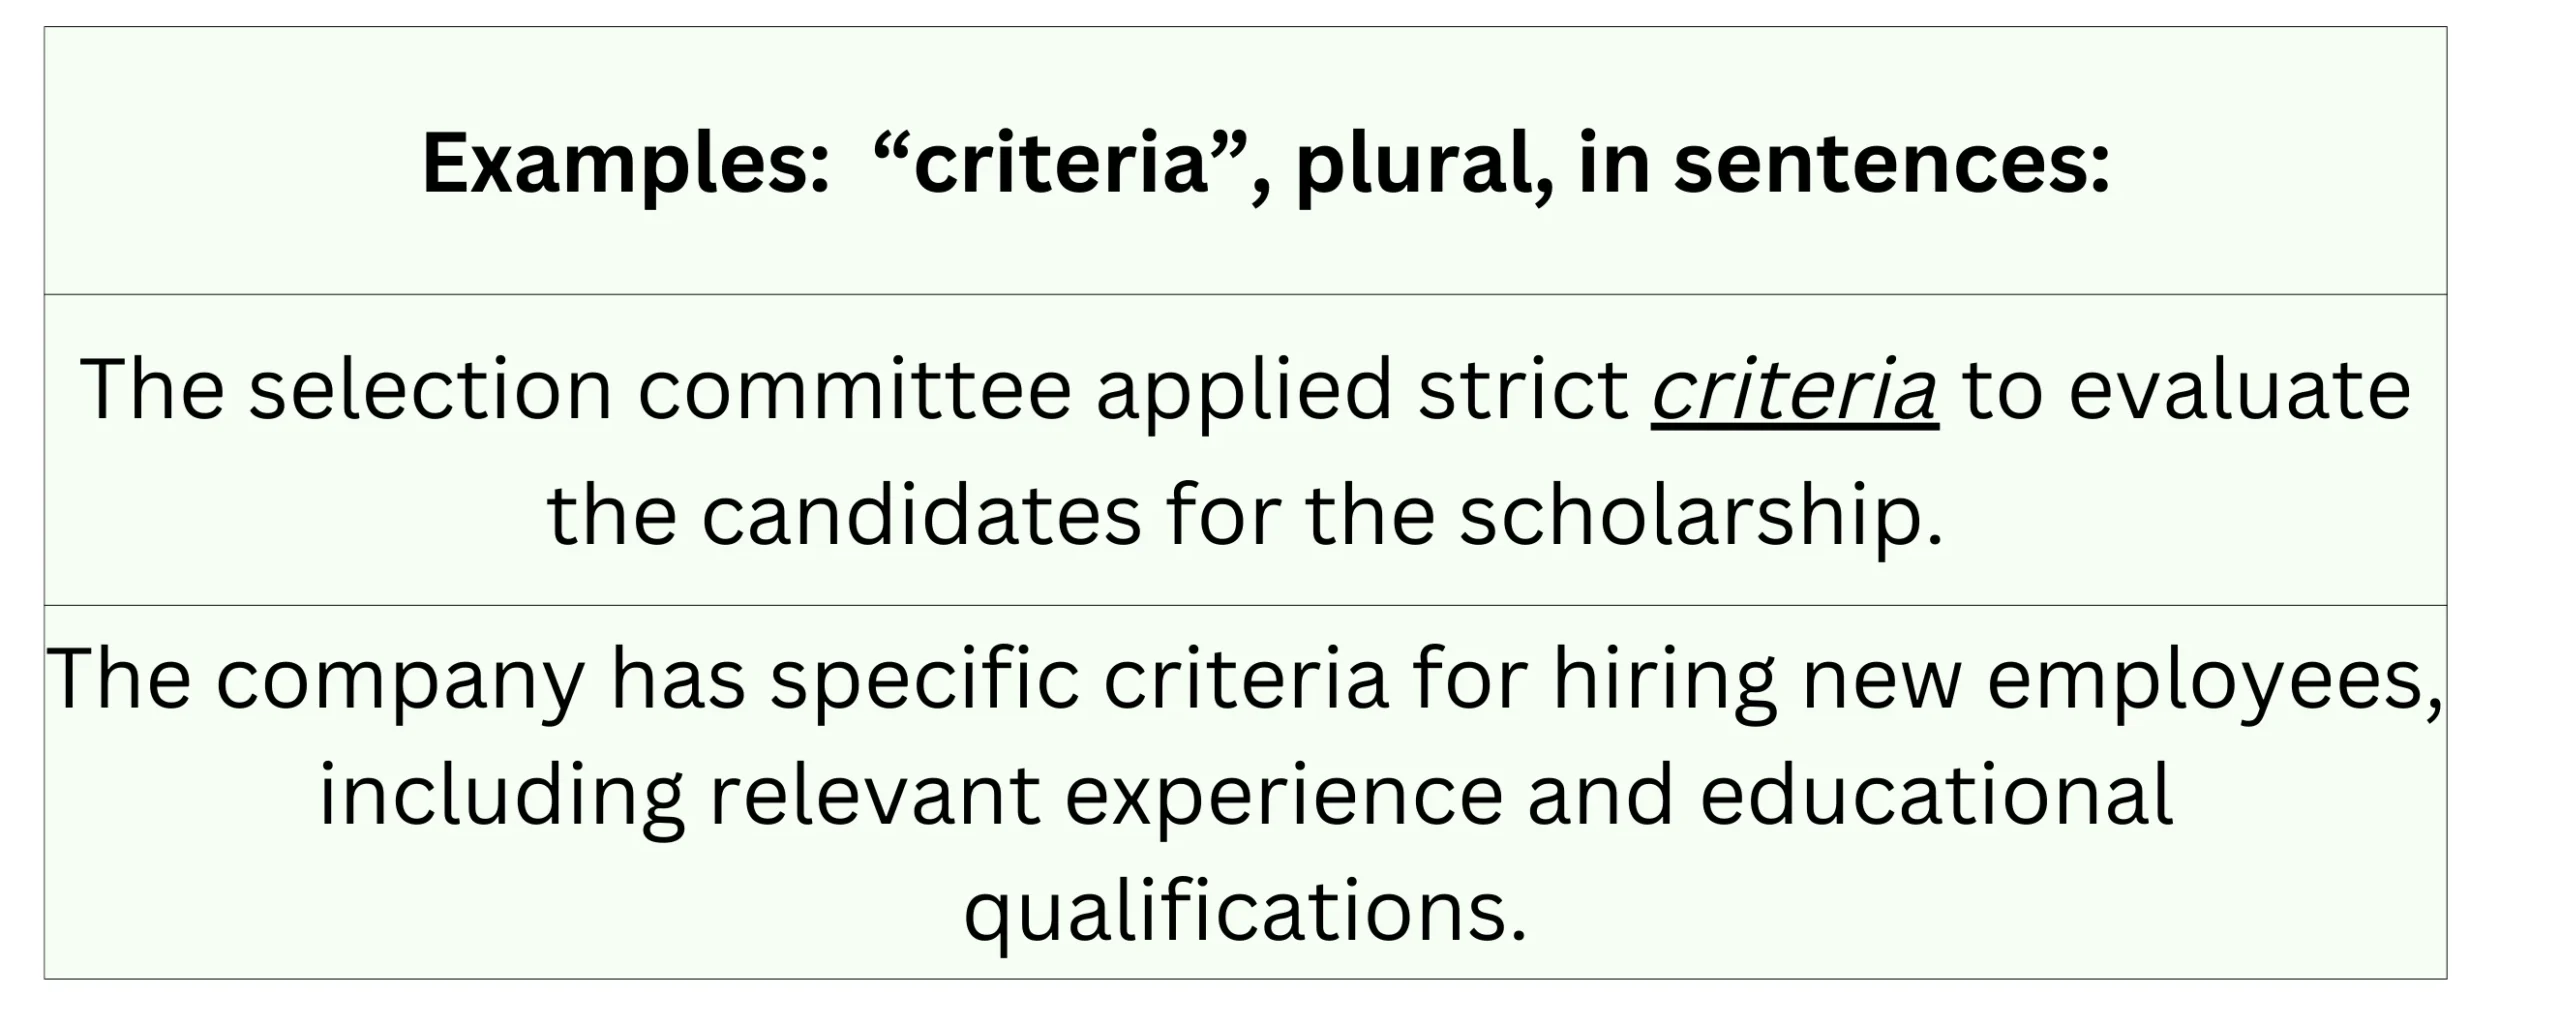 "Criteria" used as a plural noun in sentences.